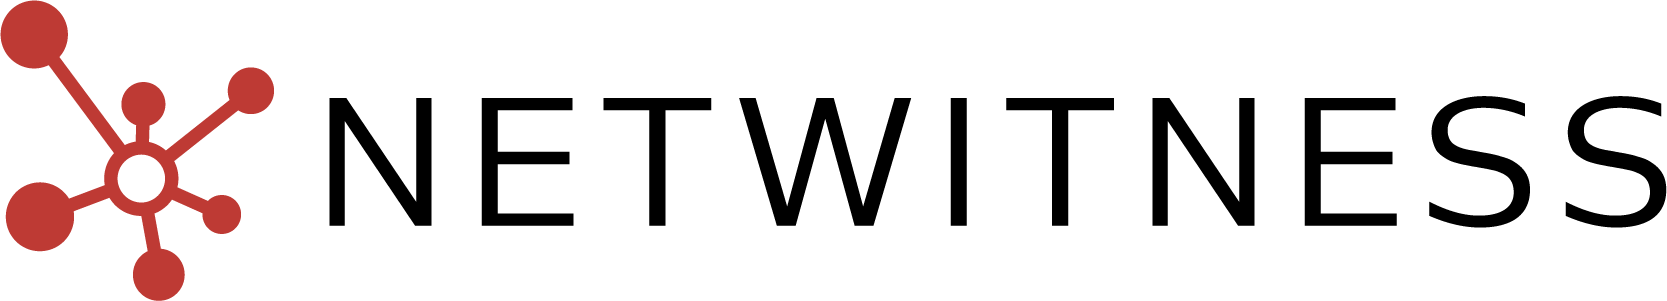 netwitness-logo-RGB.png